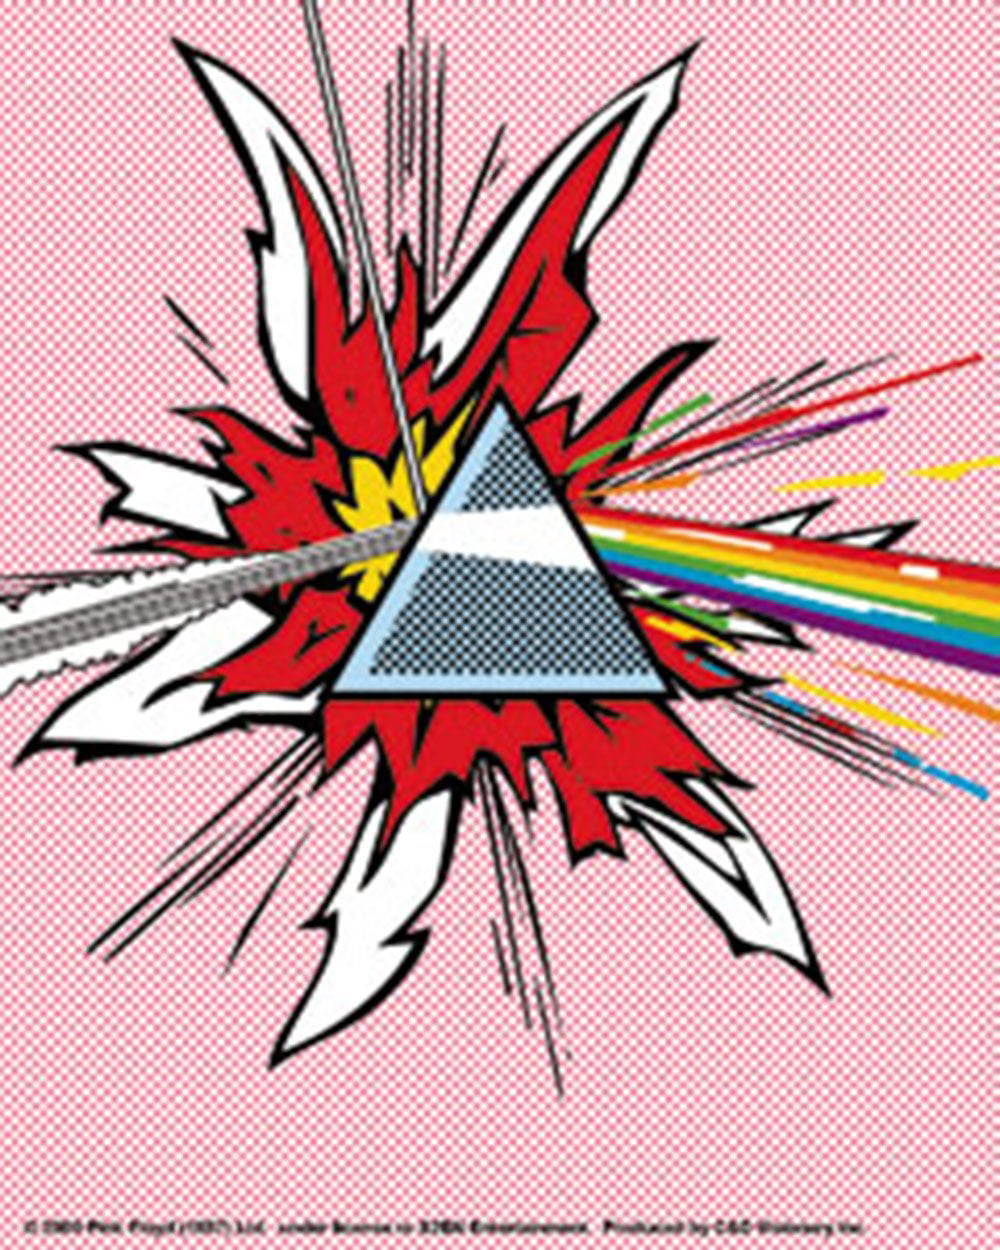 Pink Floyd sticker decal 4" x 4"